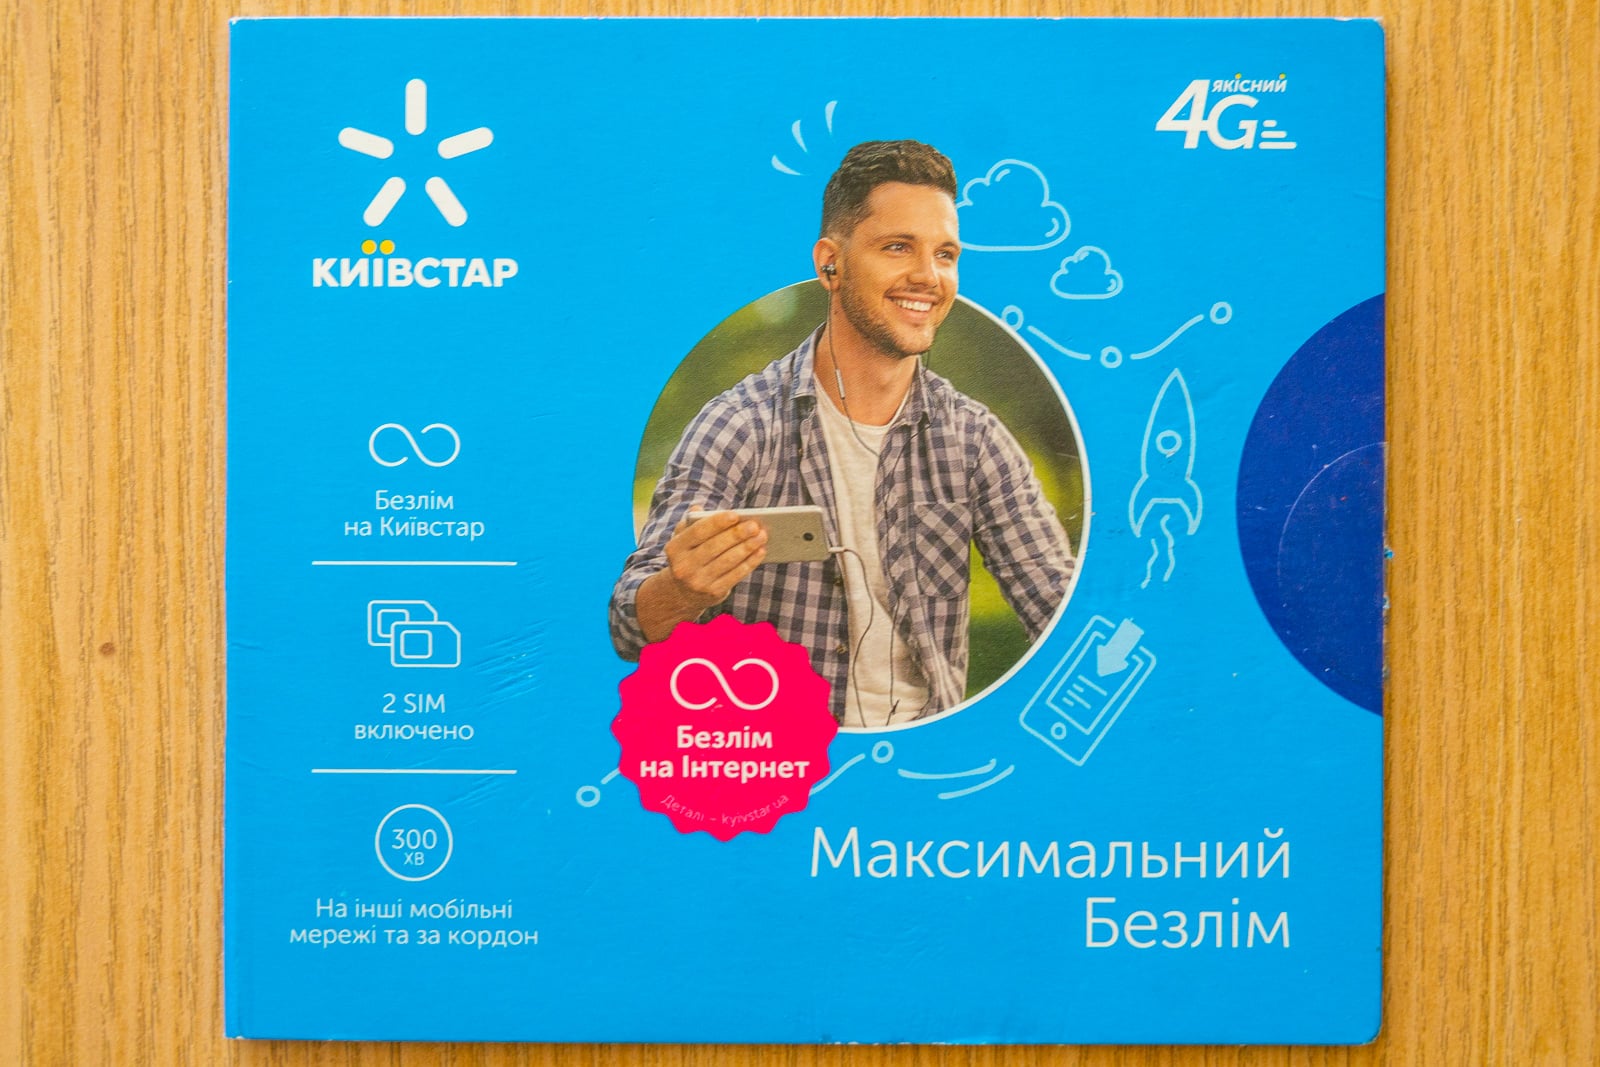 Kyivstar SIM card in Kyiv, Ukraine